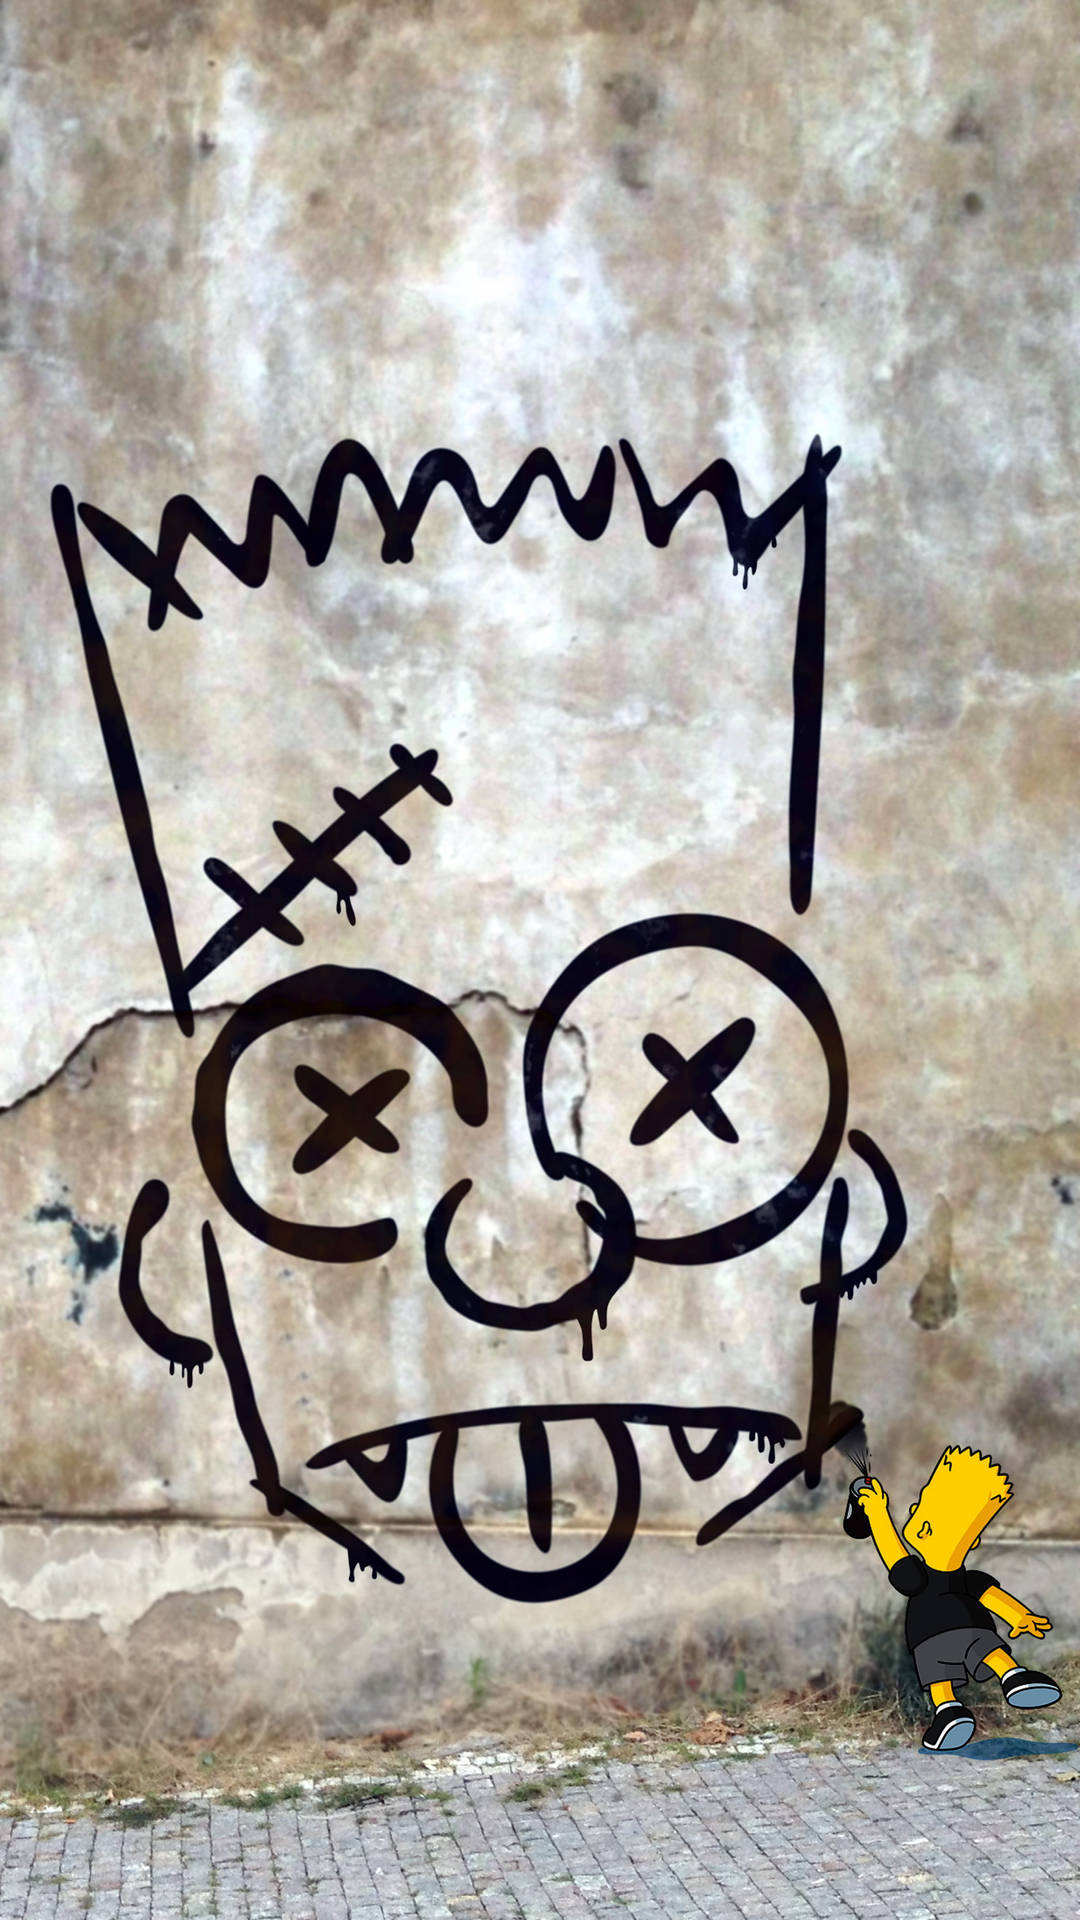 Bart Simpson Wall Graffiti Wallpaper